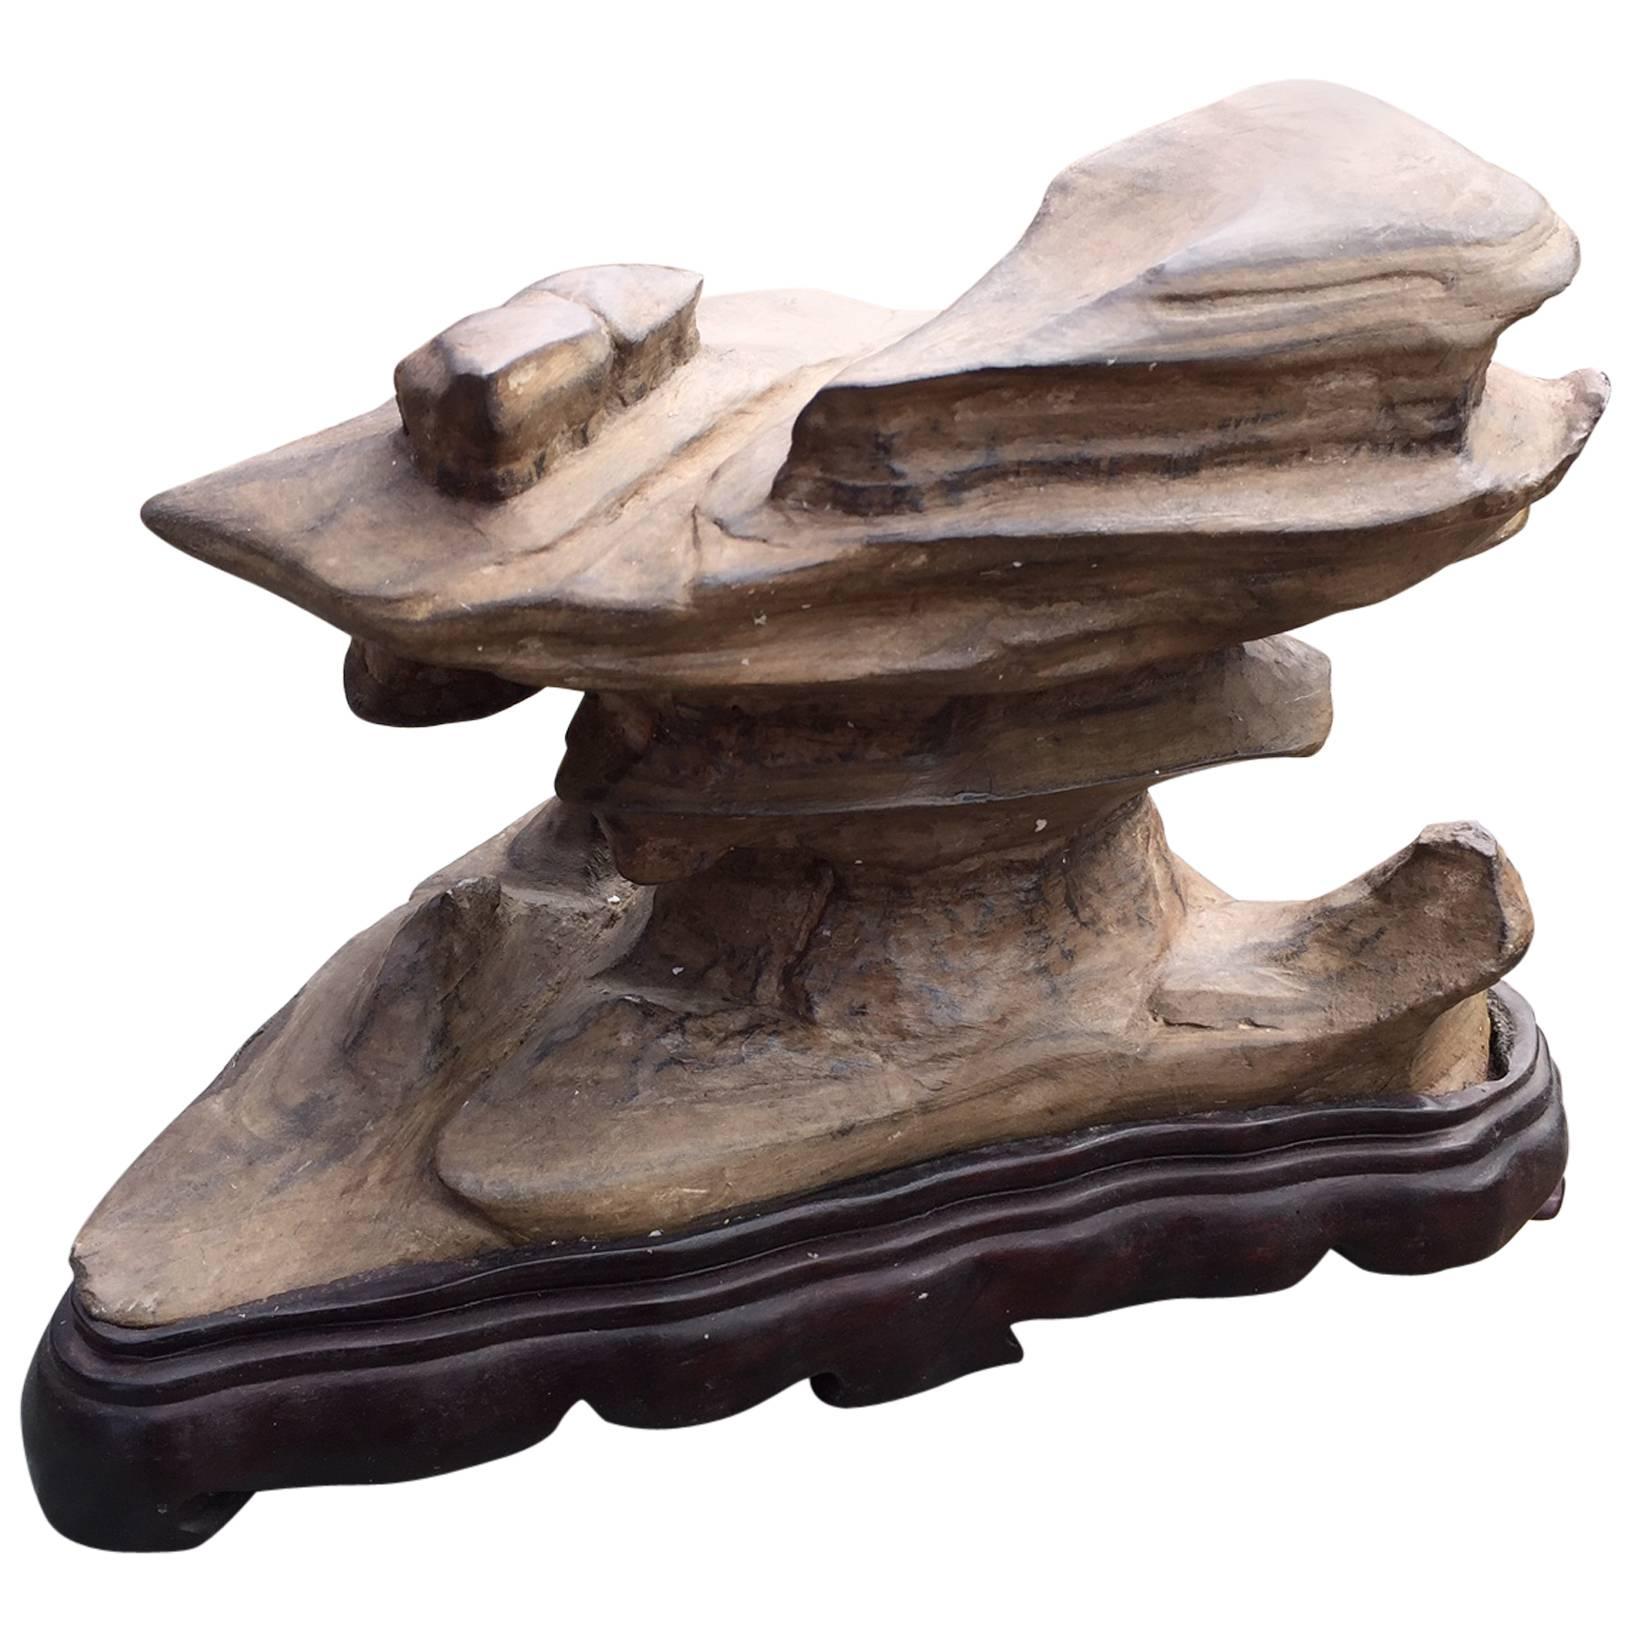 China Enchanting  "Wuling" Viewing Stone Scholar Rock with custom display base  